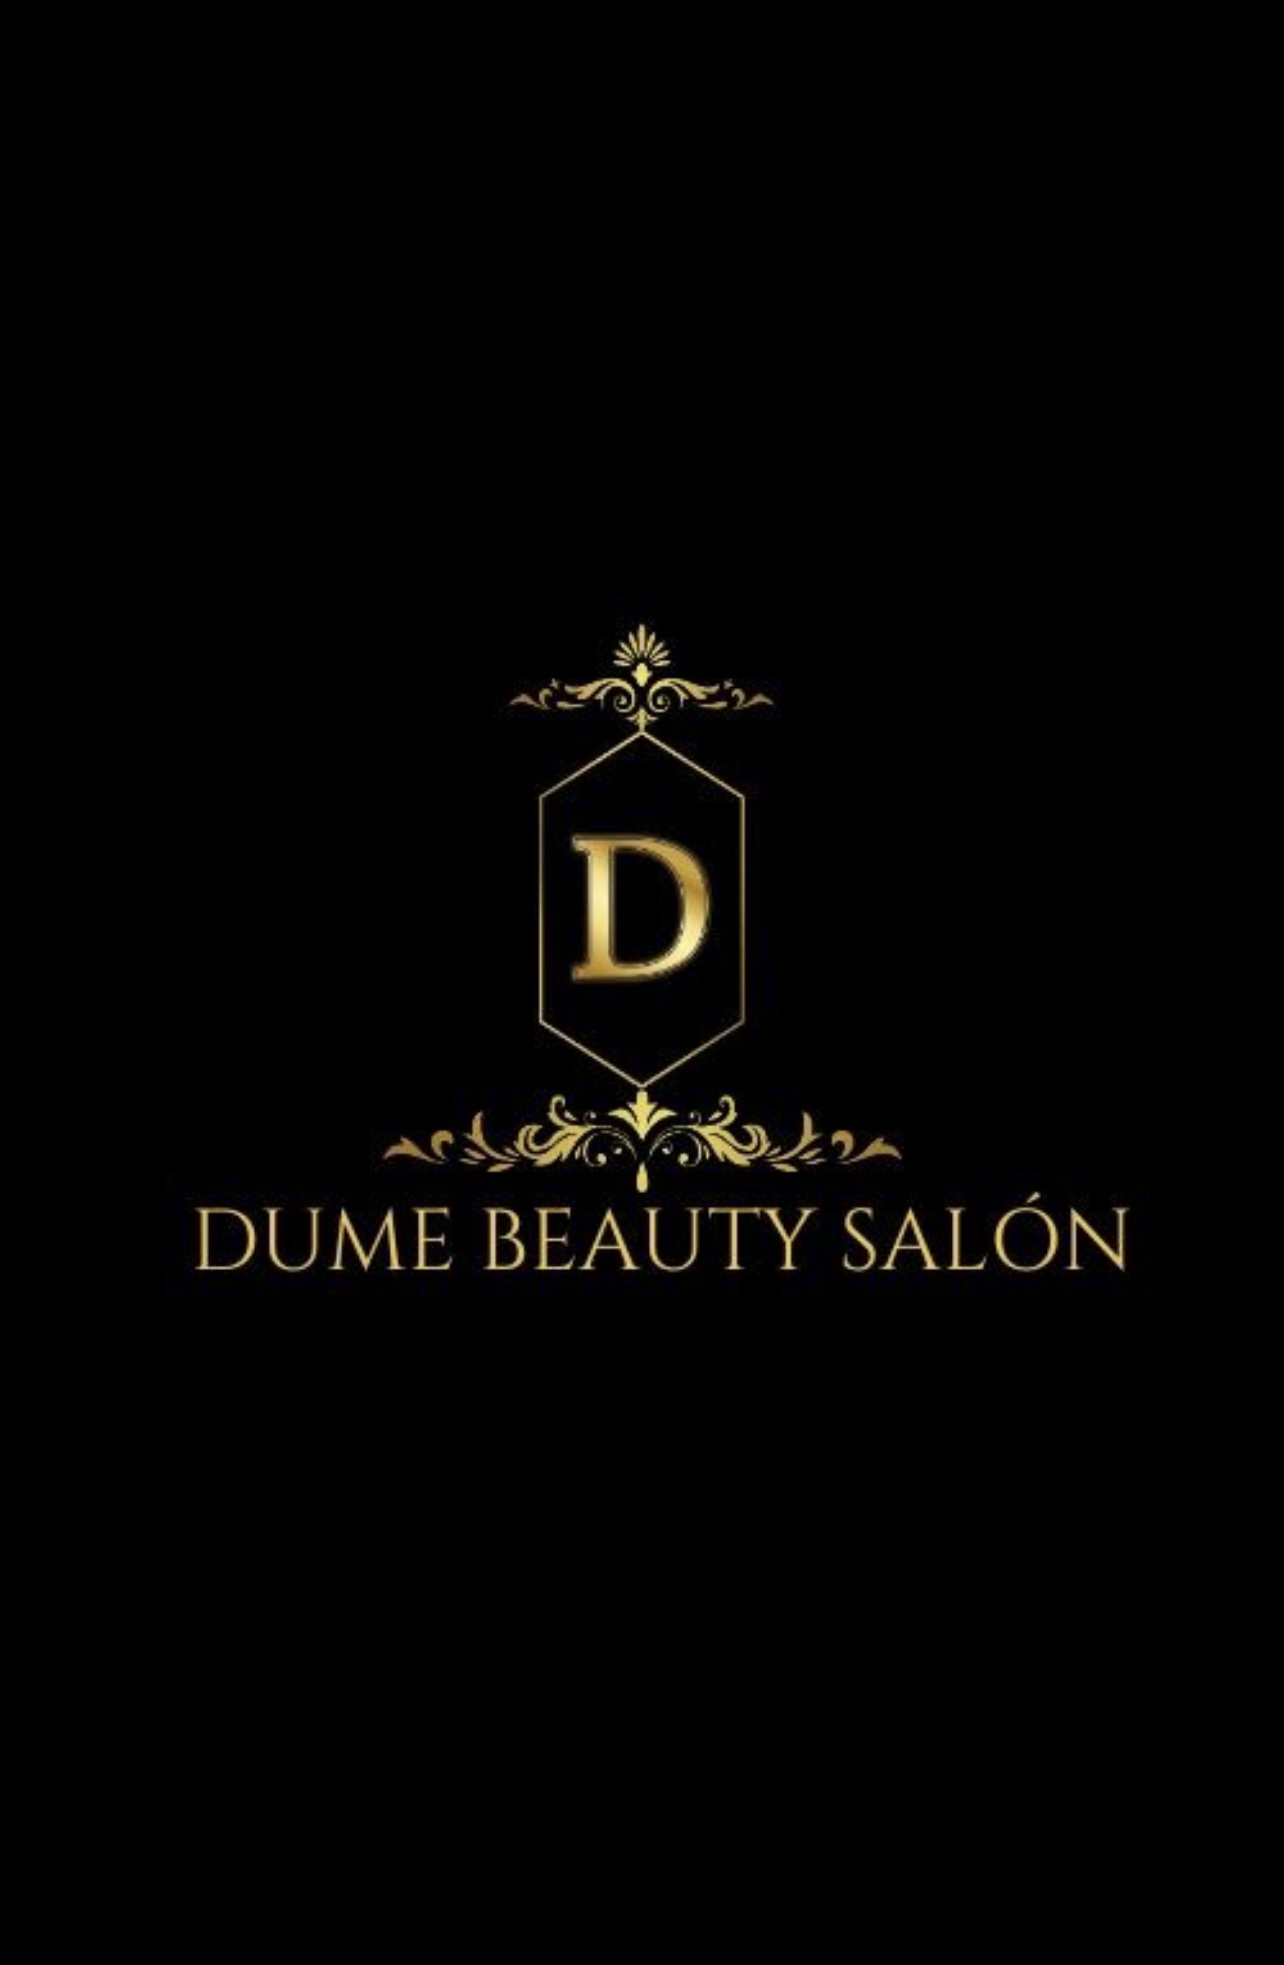 Dume Beauty Salon 4021 Washington St, Roslindale Massachusetts 02131